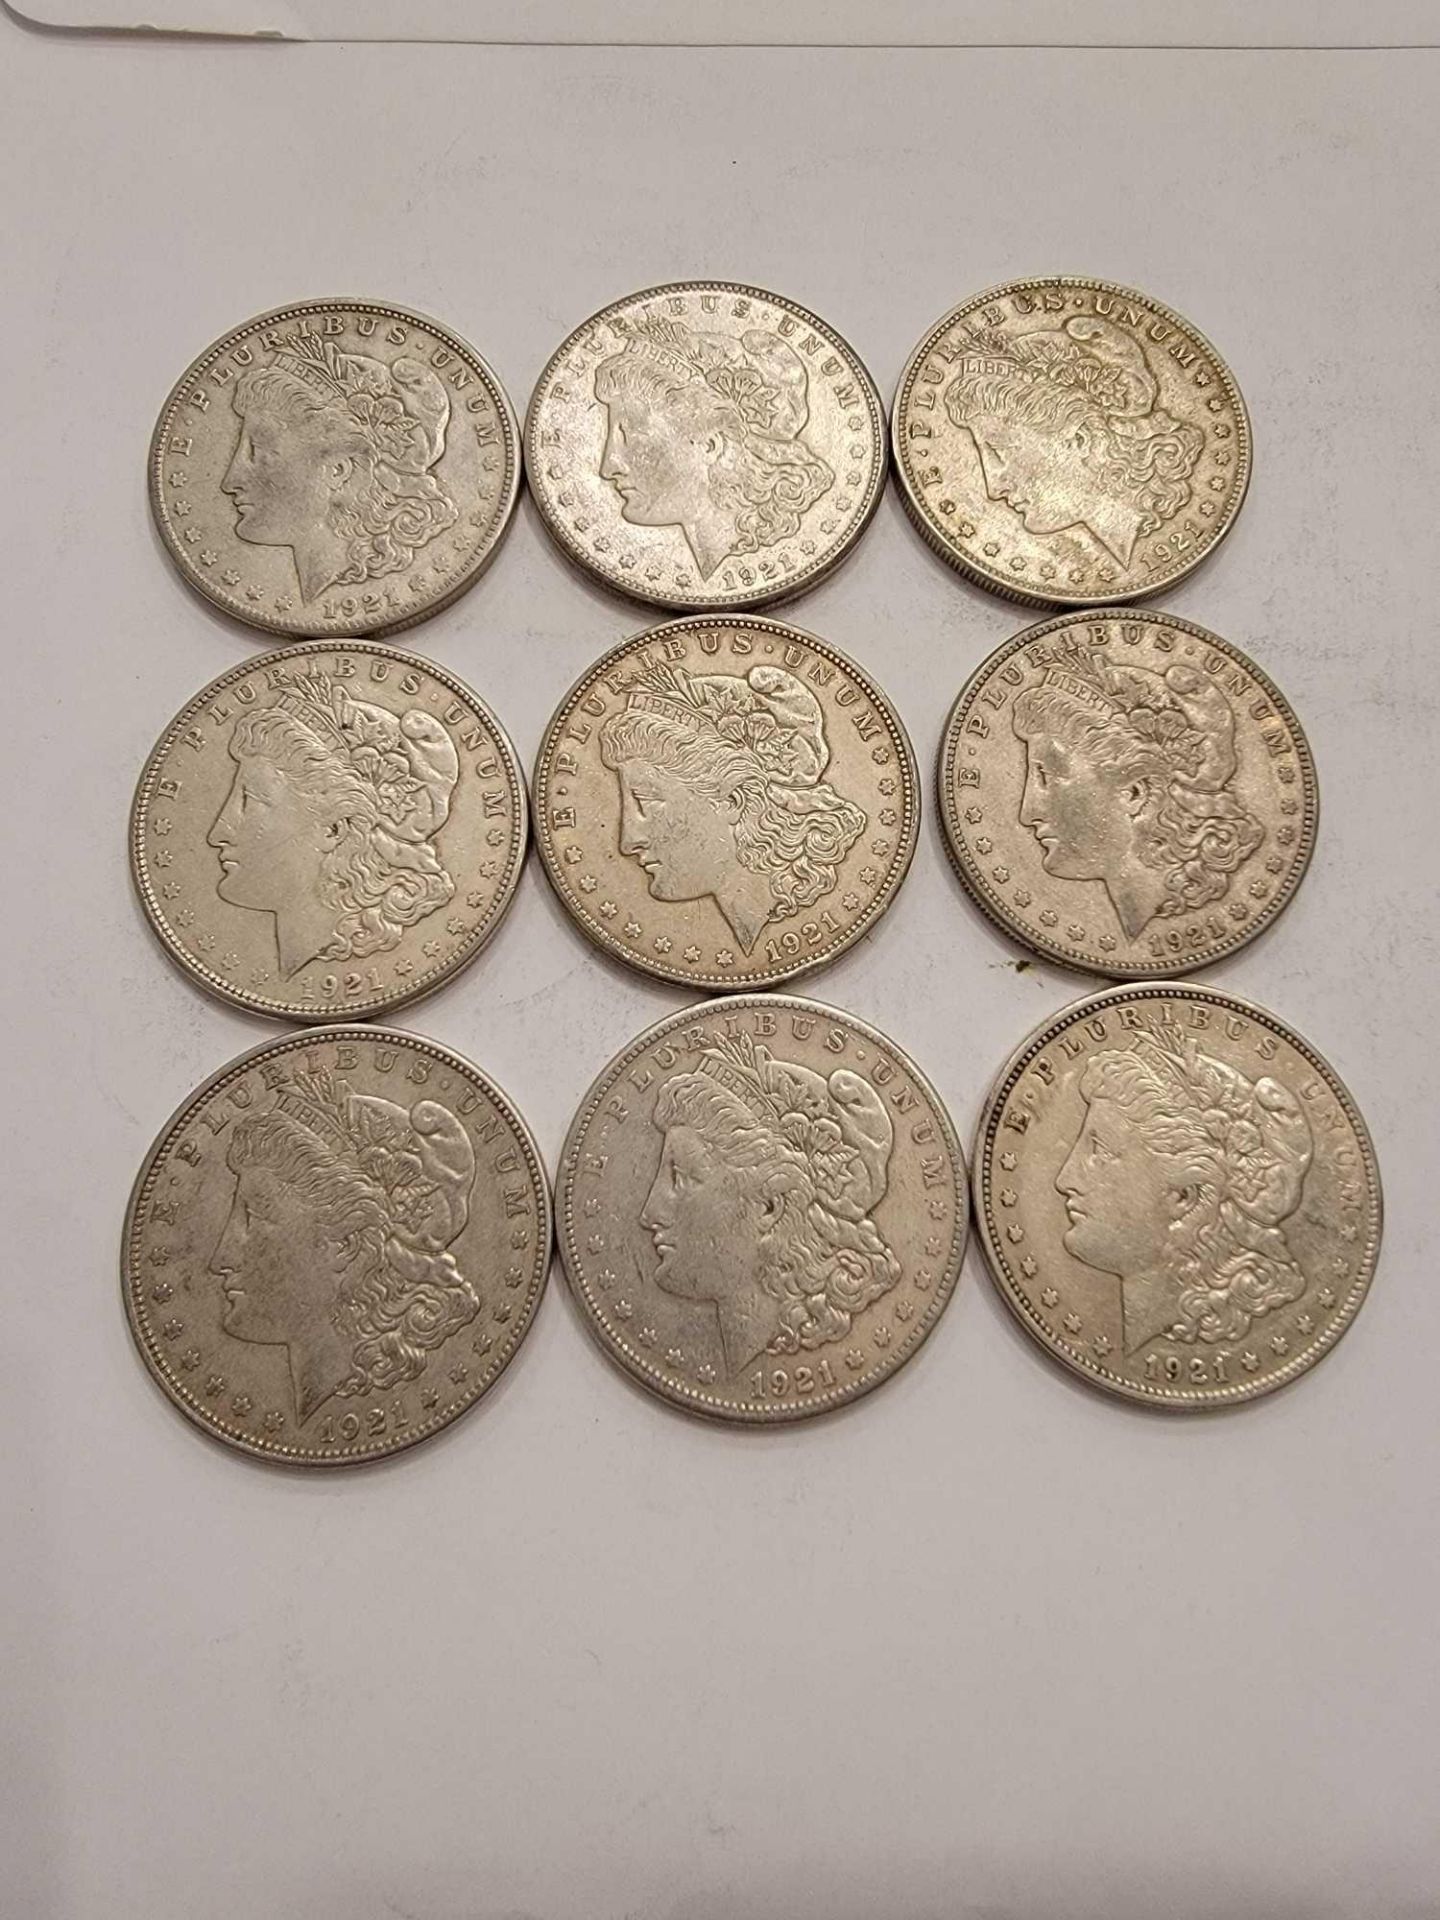 9 1921 morgan dollars